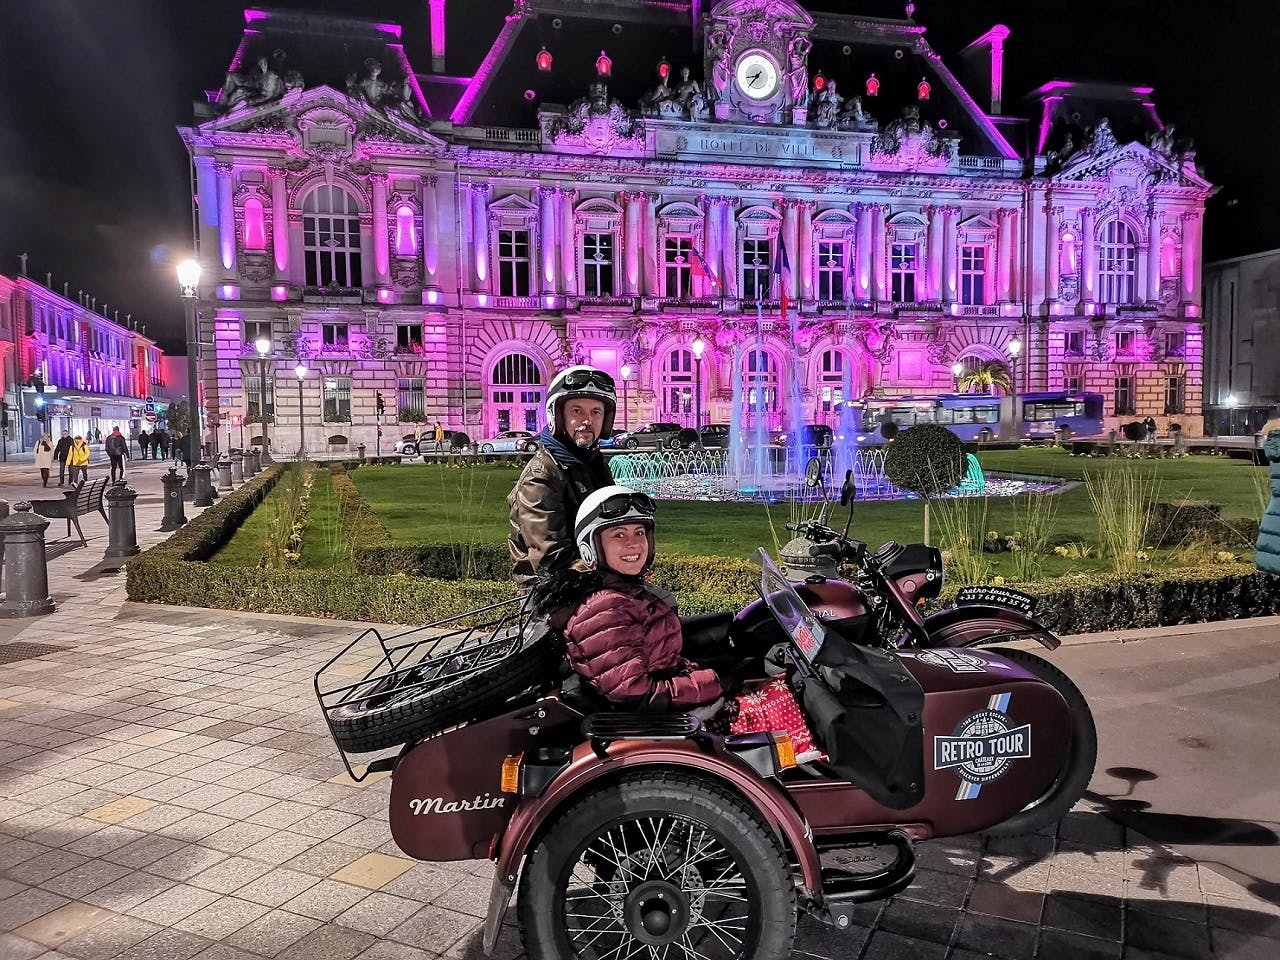 Retro sidecar tour by night